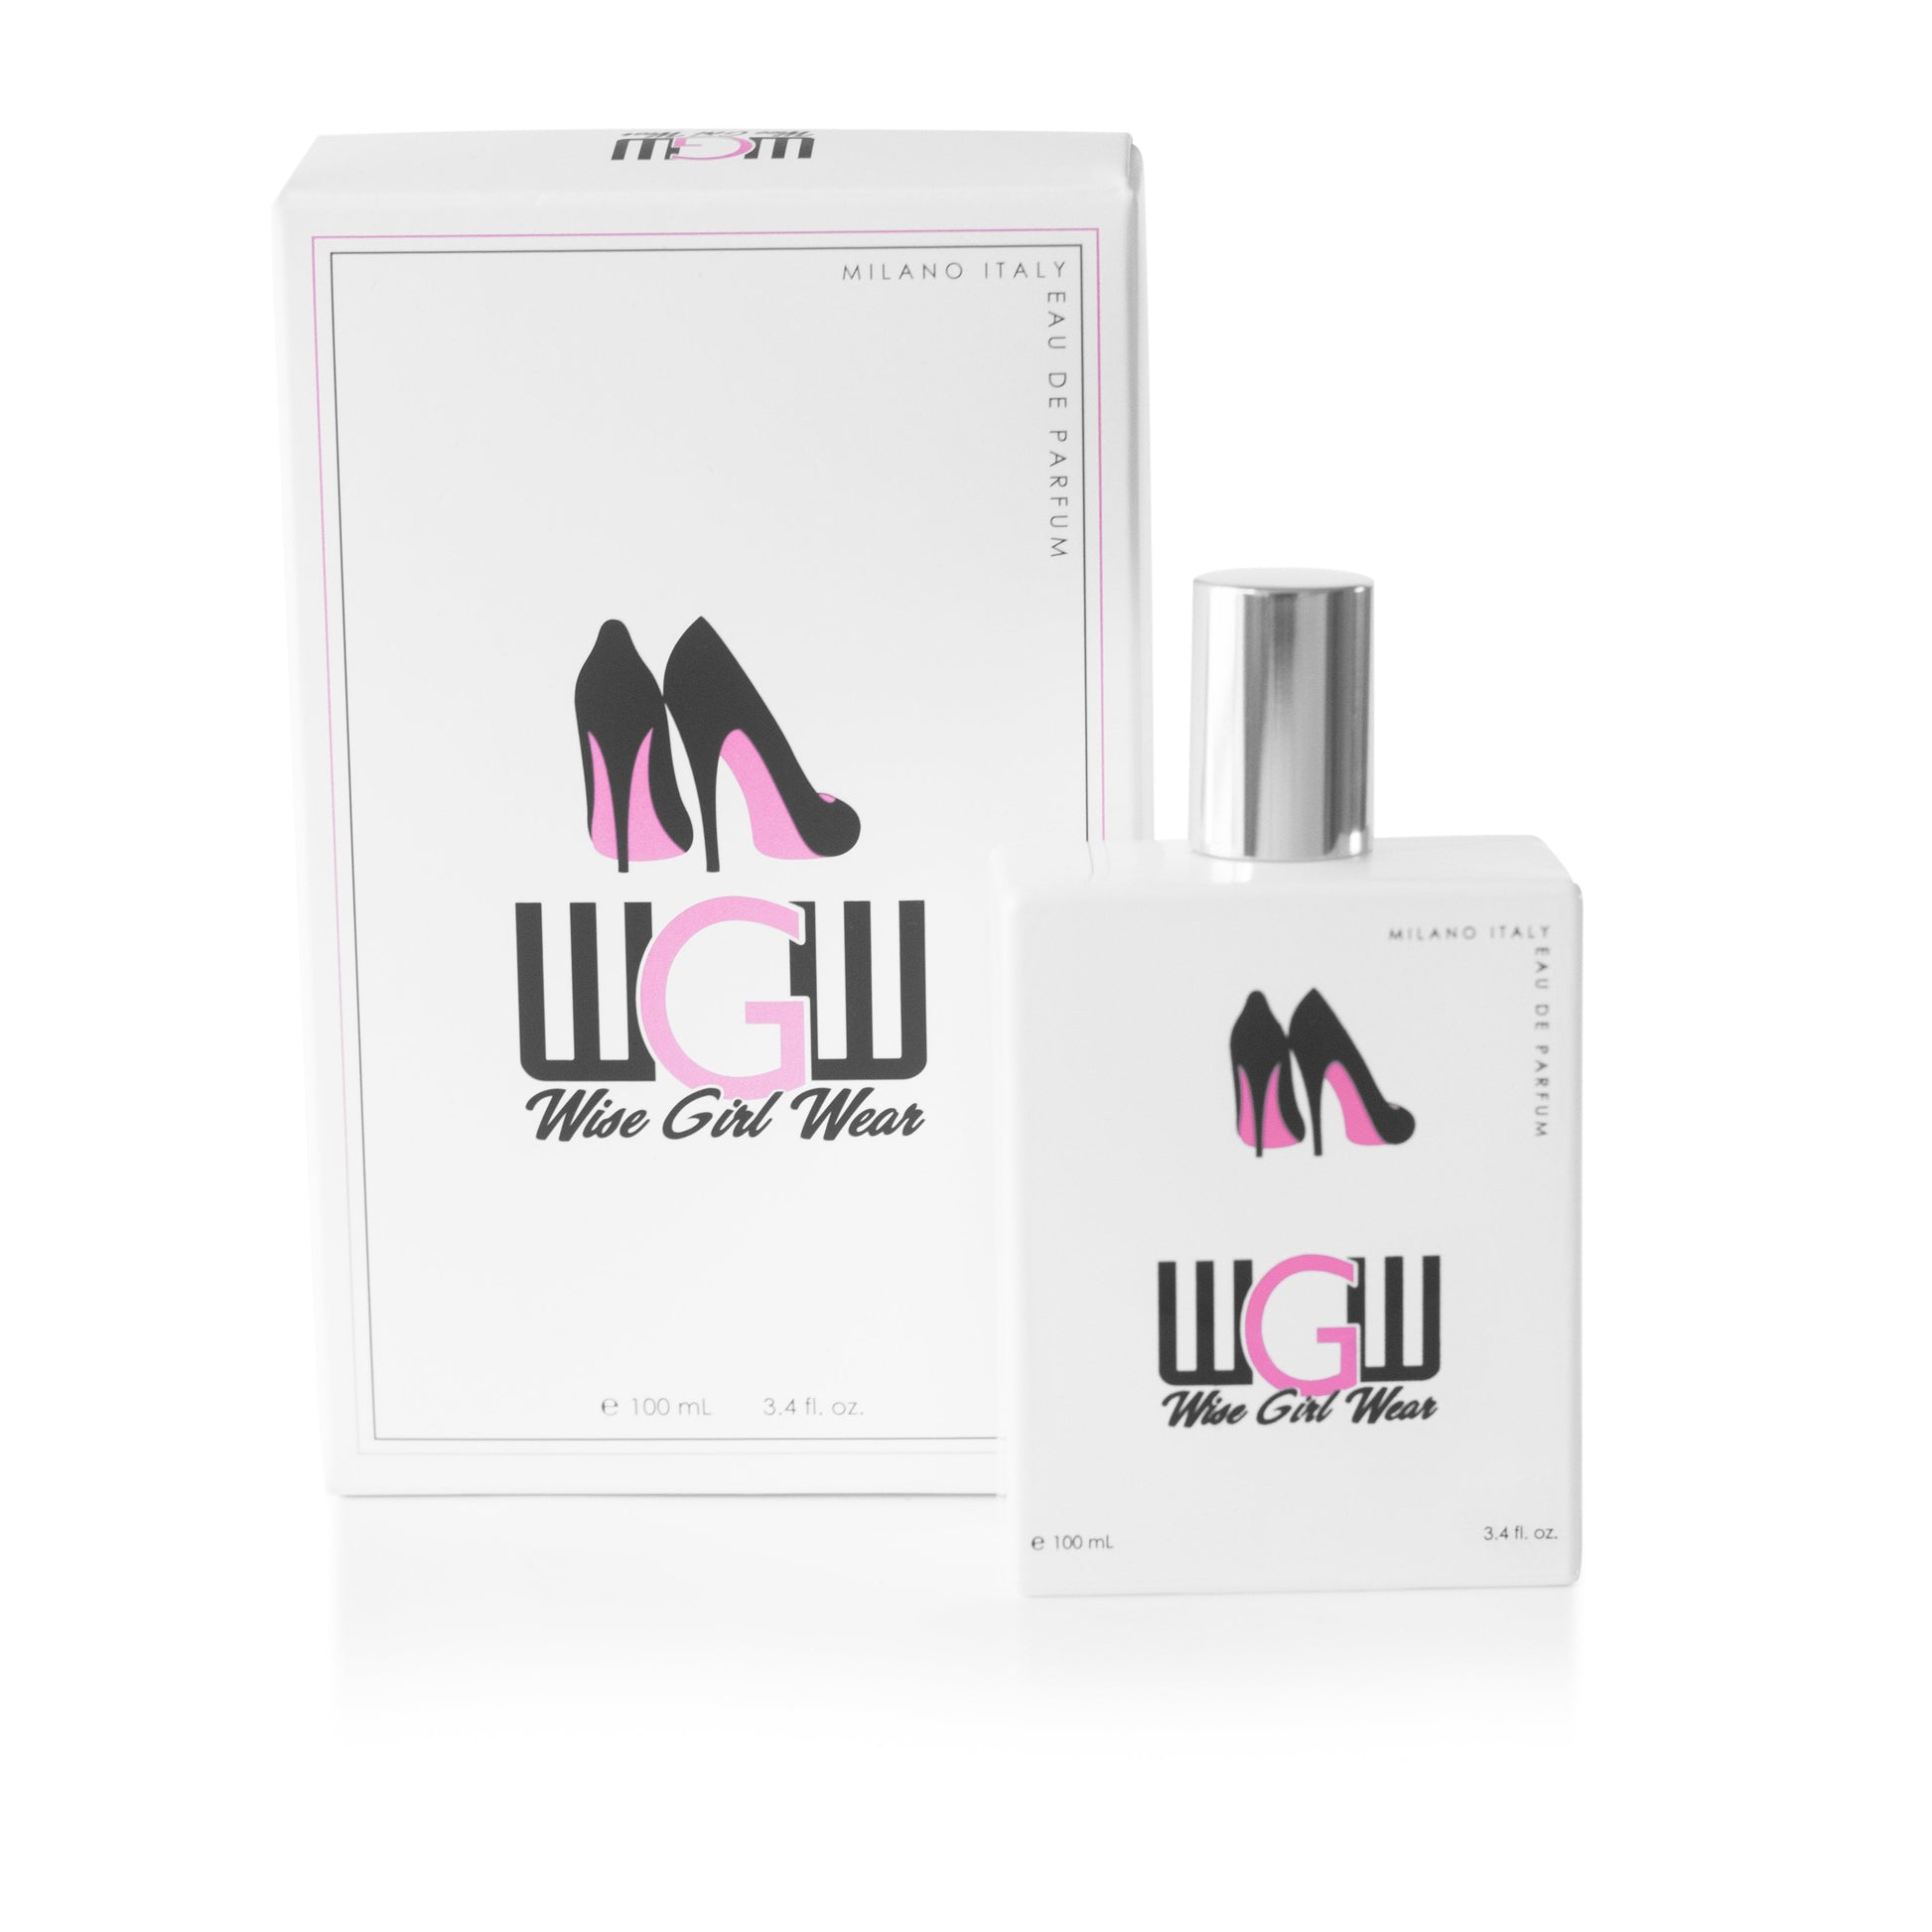 Wise Girl Wear Eau de Parfum Spray for Women, Product image 1